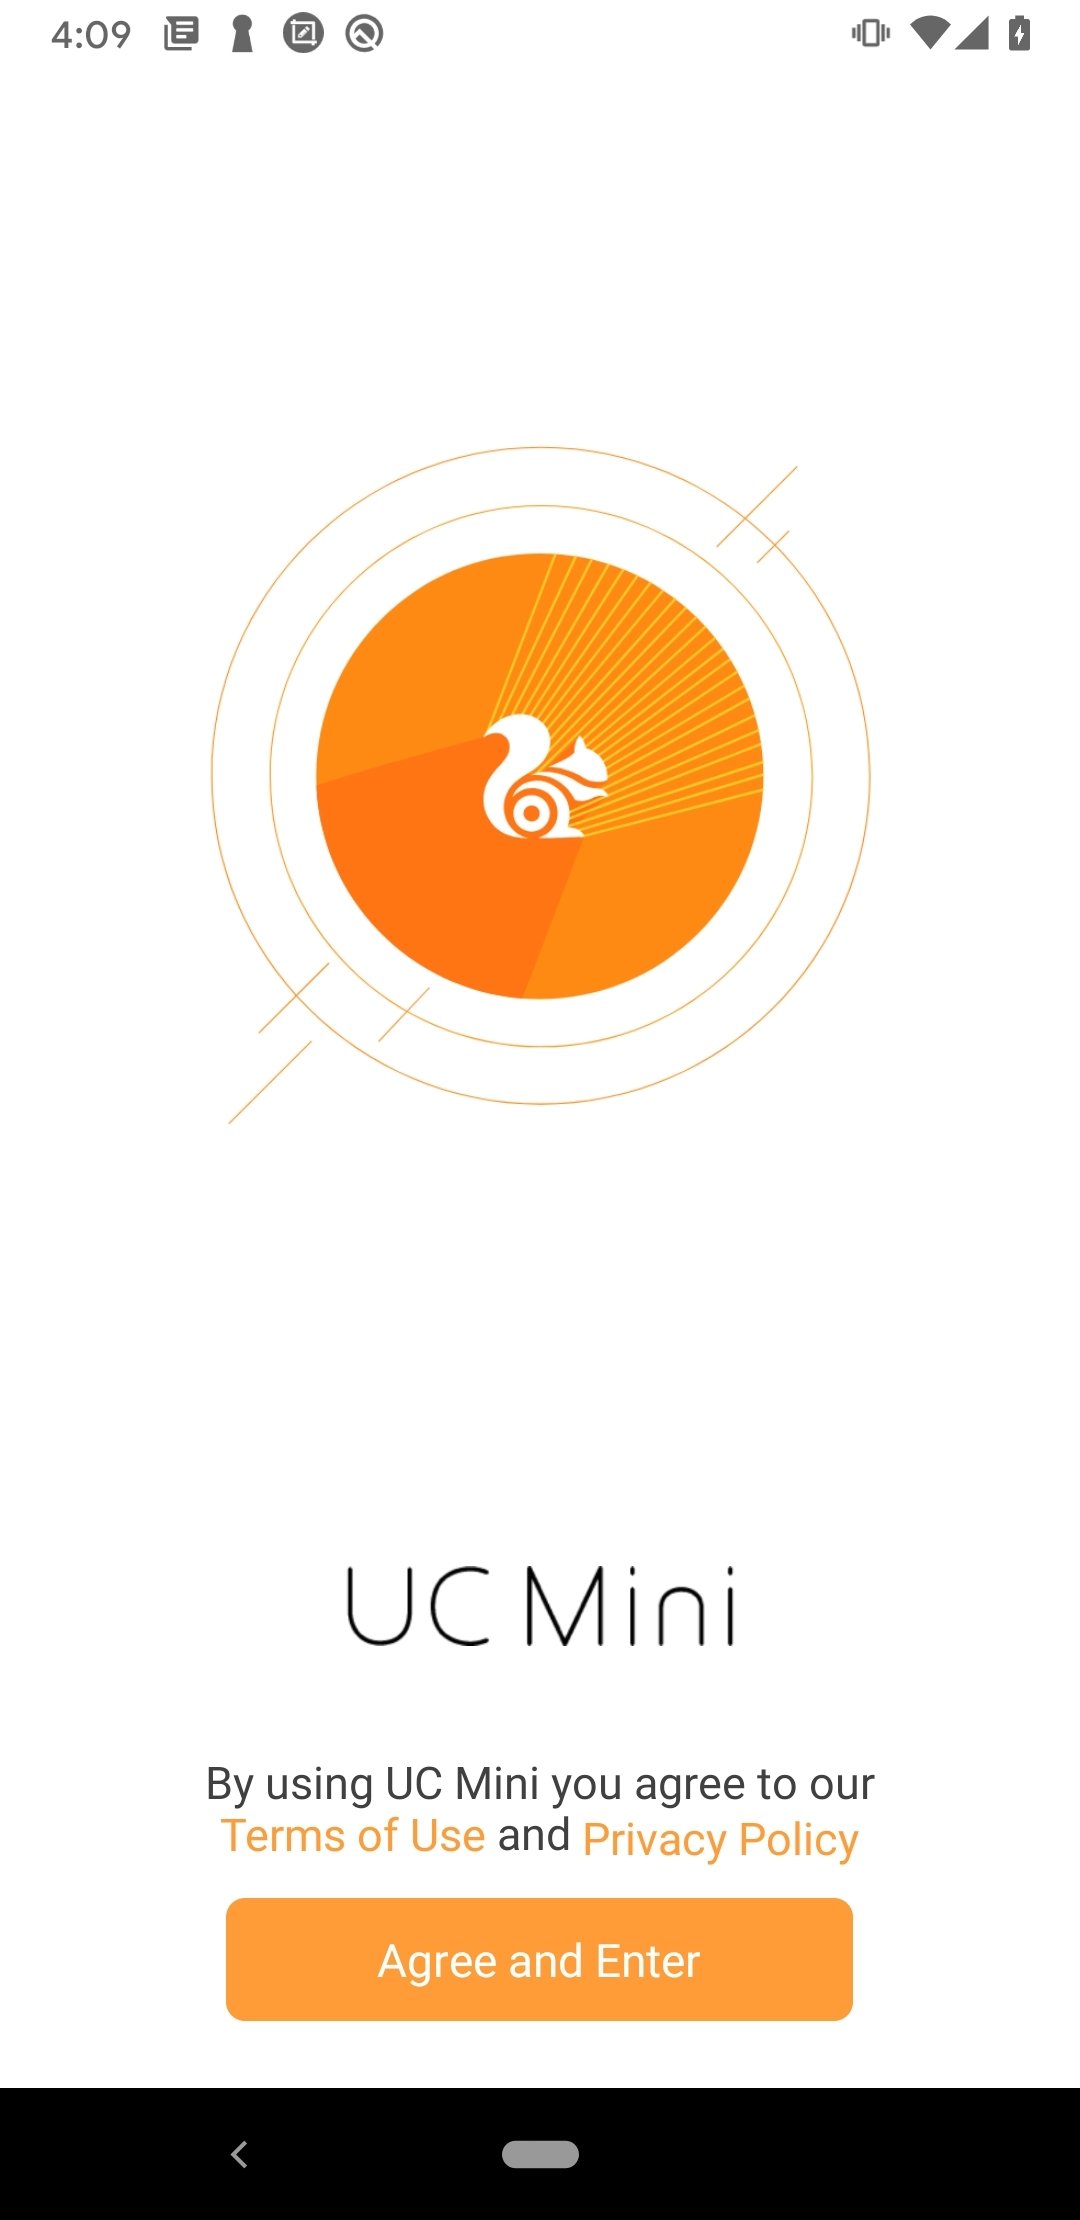 uc mini apk download 